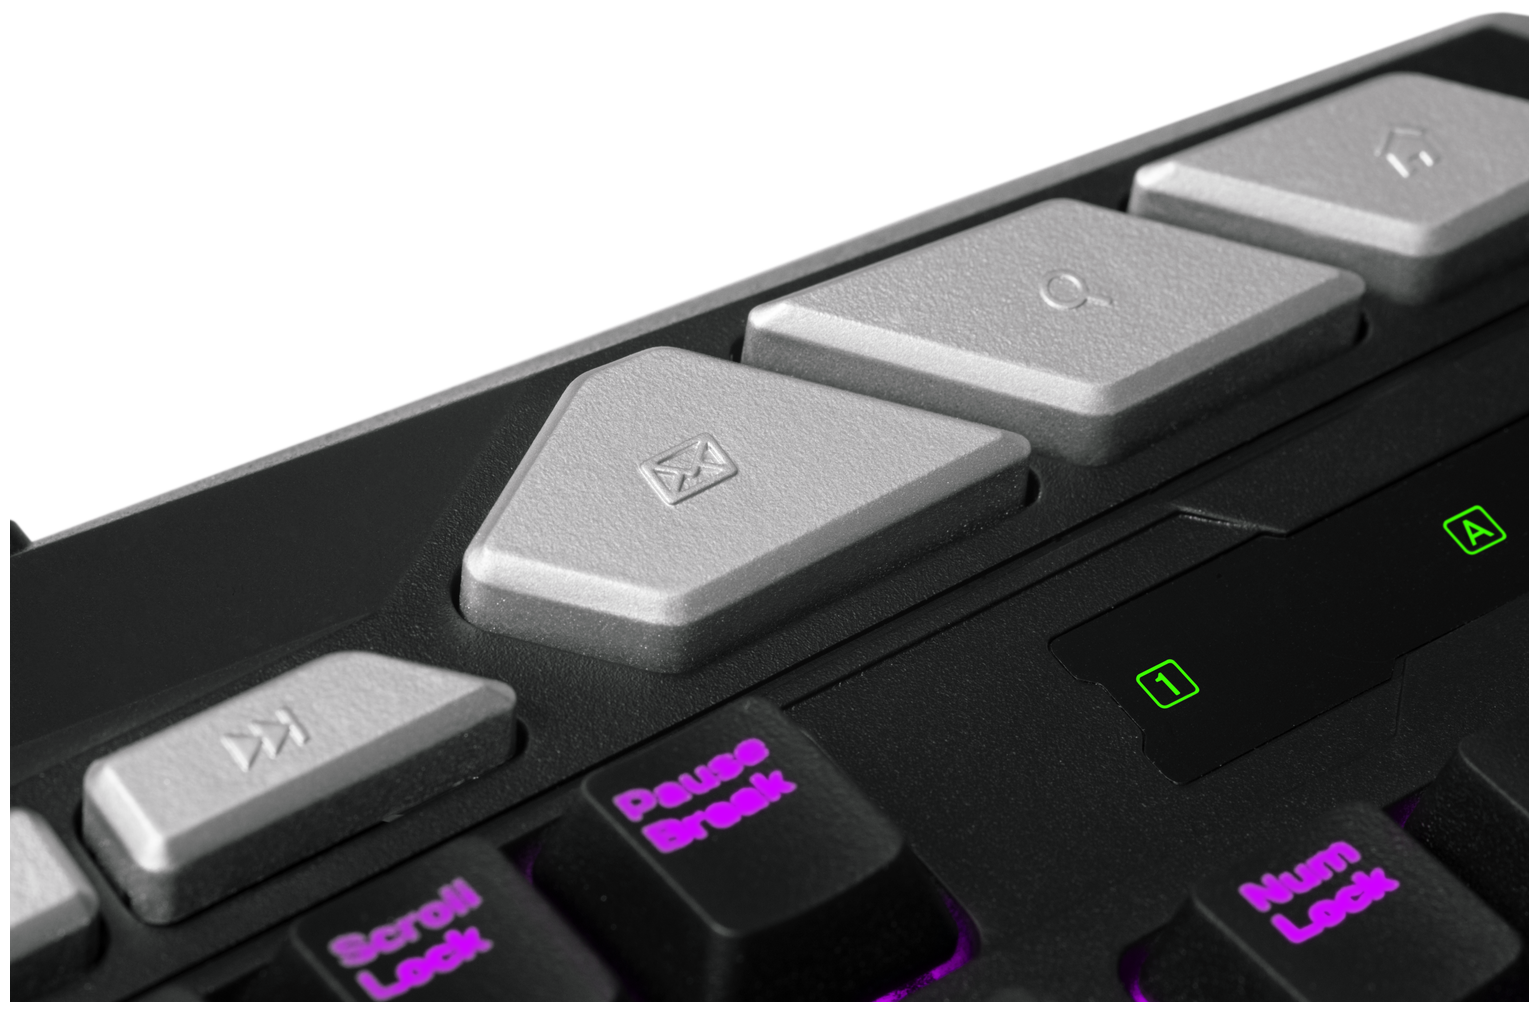 Проводная игровая клавиатура Defender Doom Keeper GK-100DL RU,3-х цветная,19 Anti-Ghost